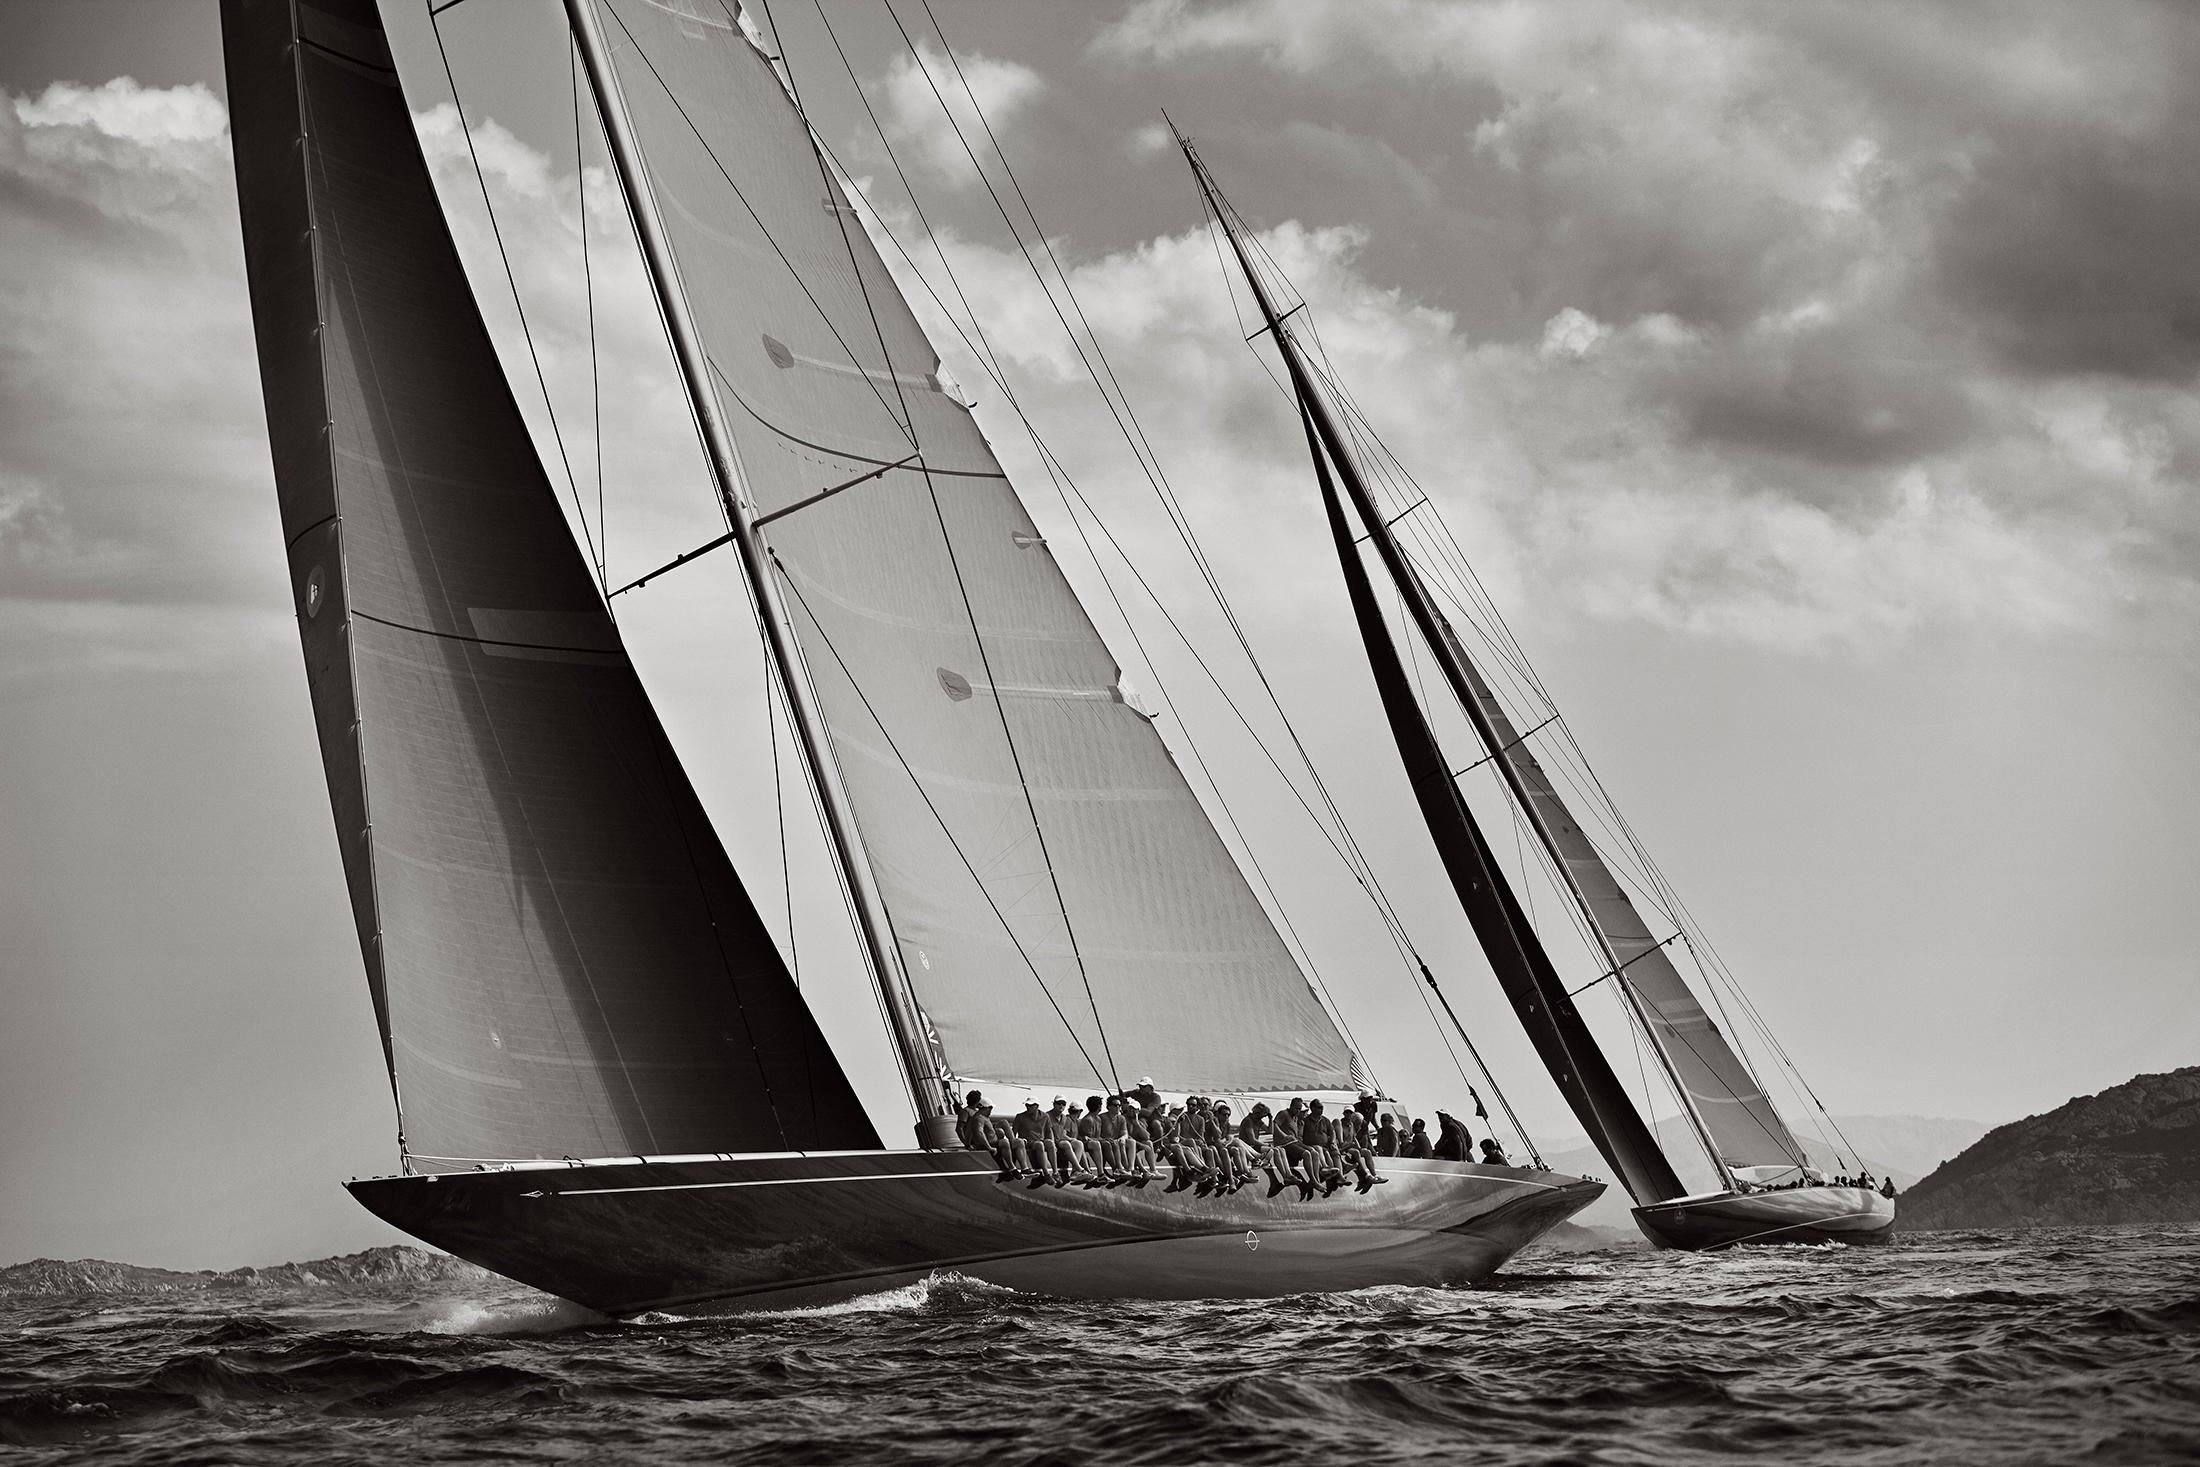 Drew Doggett Portrait Photograph - World Class Racing Yachts in Italy, Nautical, Horizontal, Iconic